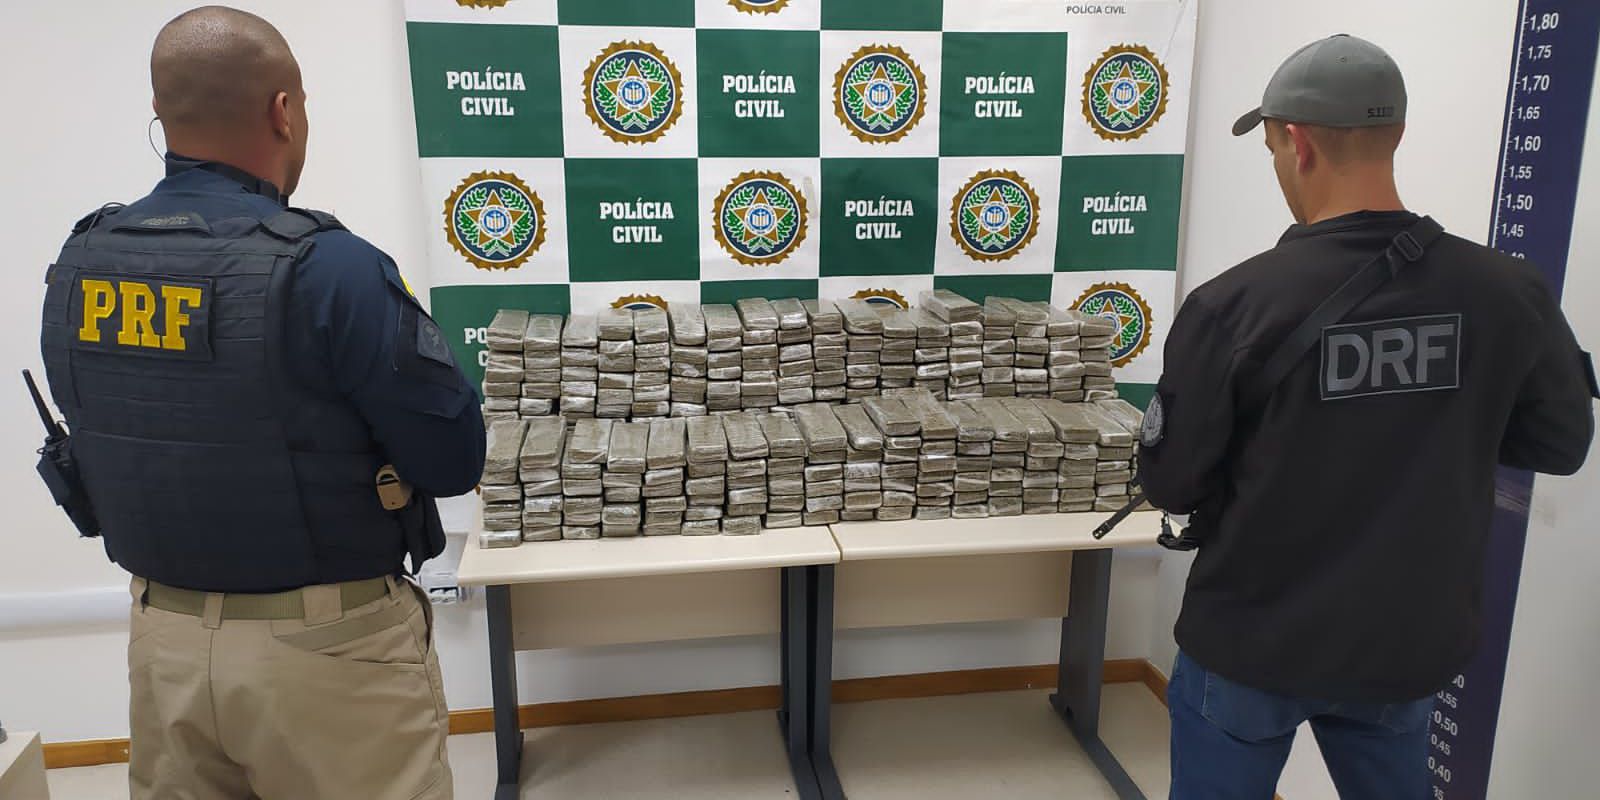 Police seize 250 kilos of marijuana in Angra dos Reis